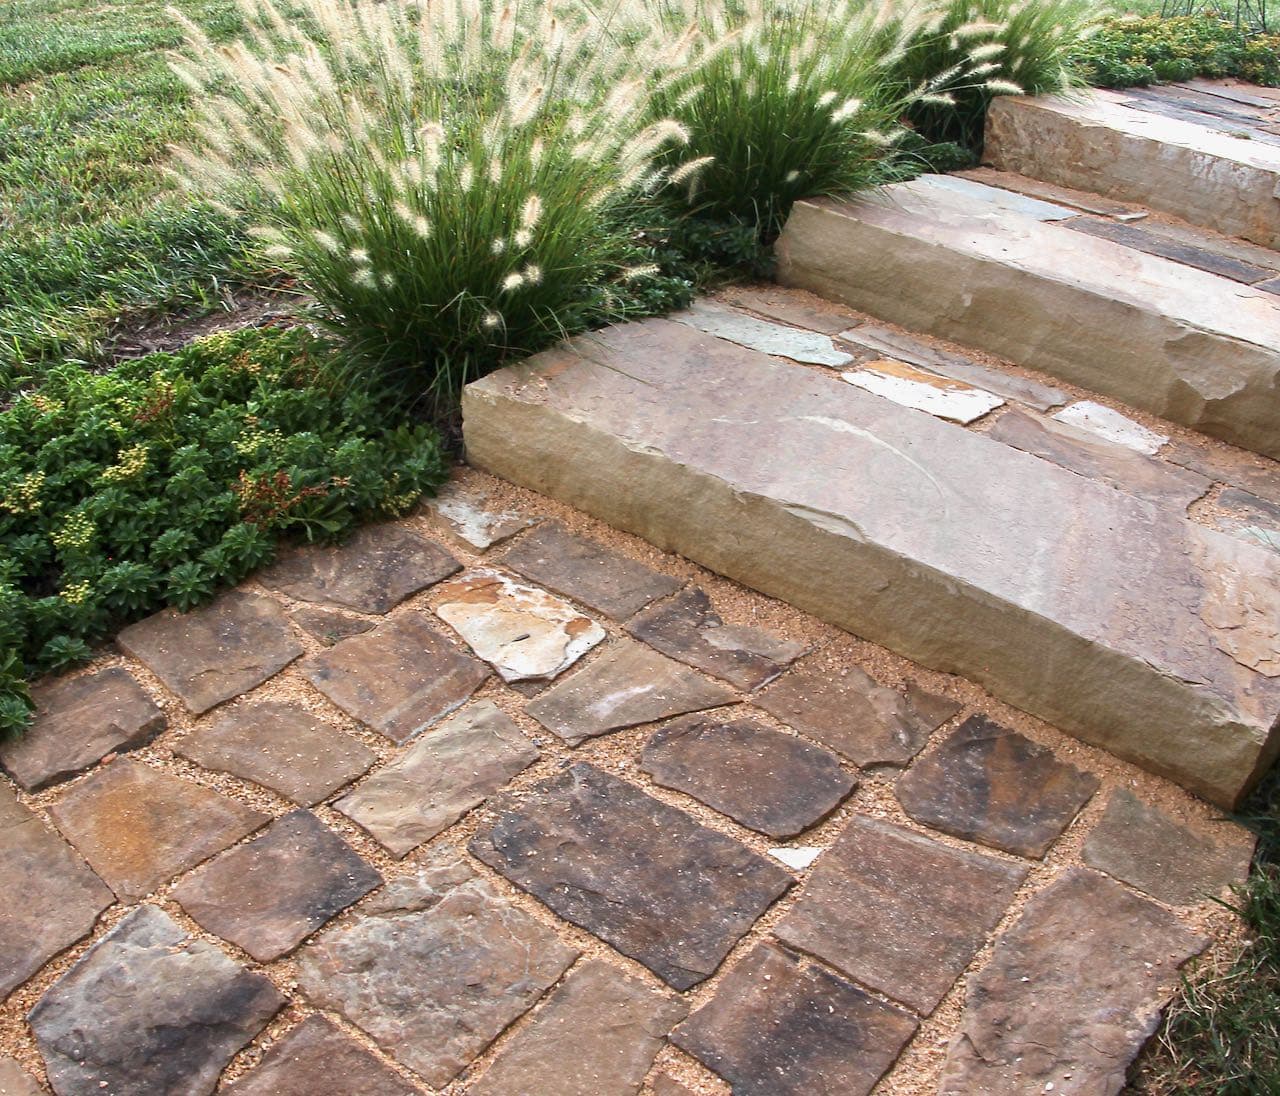 Anti-Skid Granite Steps: 9 Ways for Safe & Beautiful Granite Steps